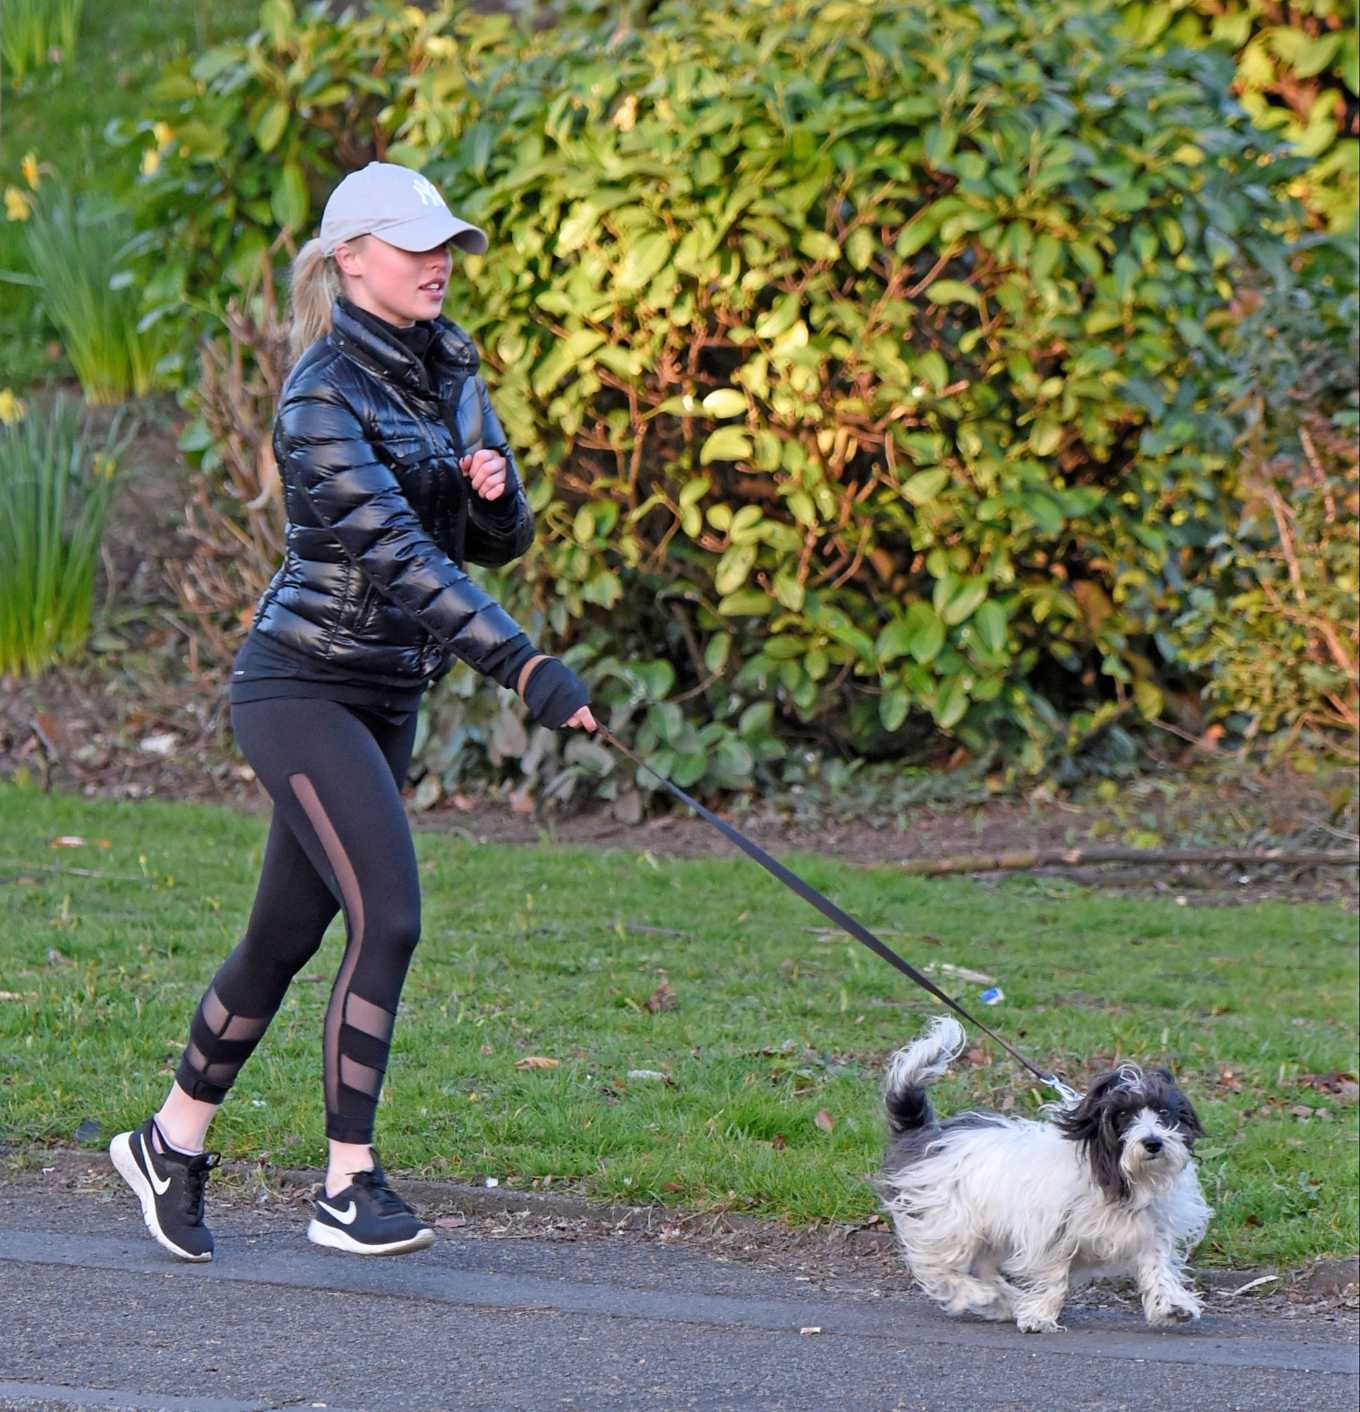 Jorgie Porter â€“ Jog with her dog in Manchester